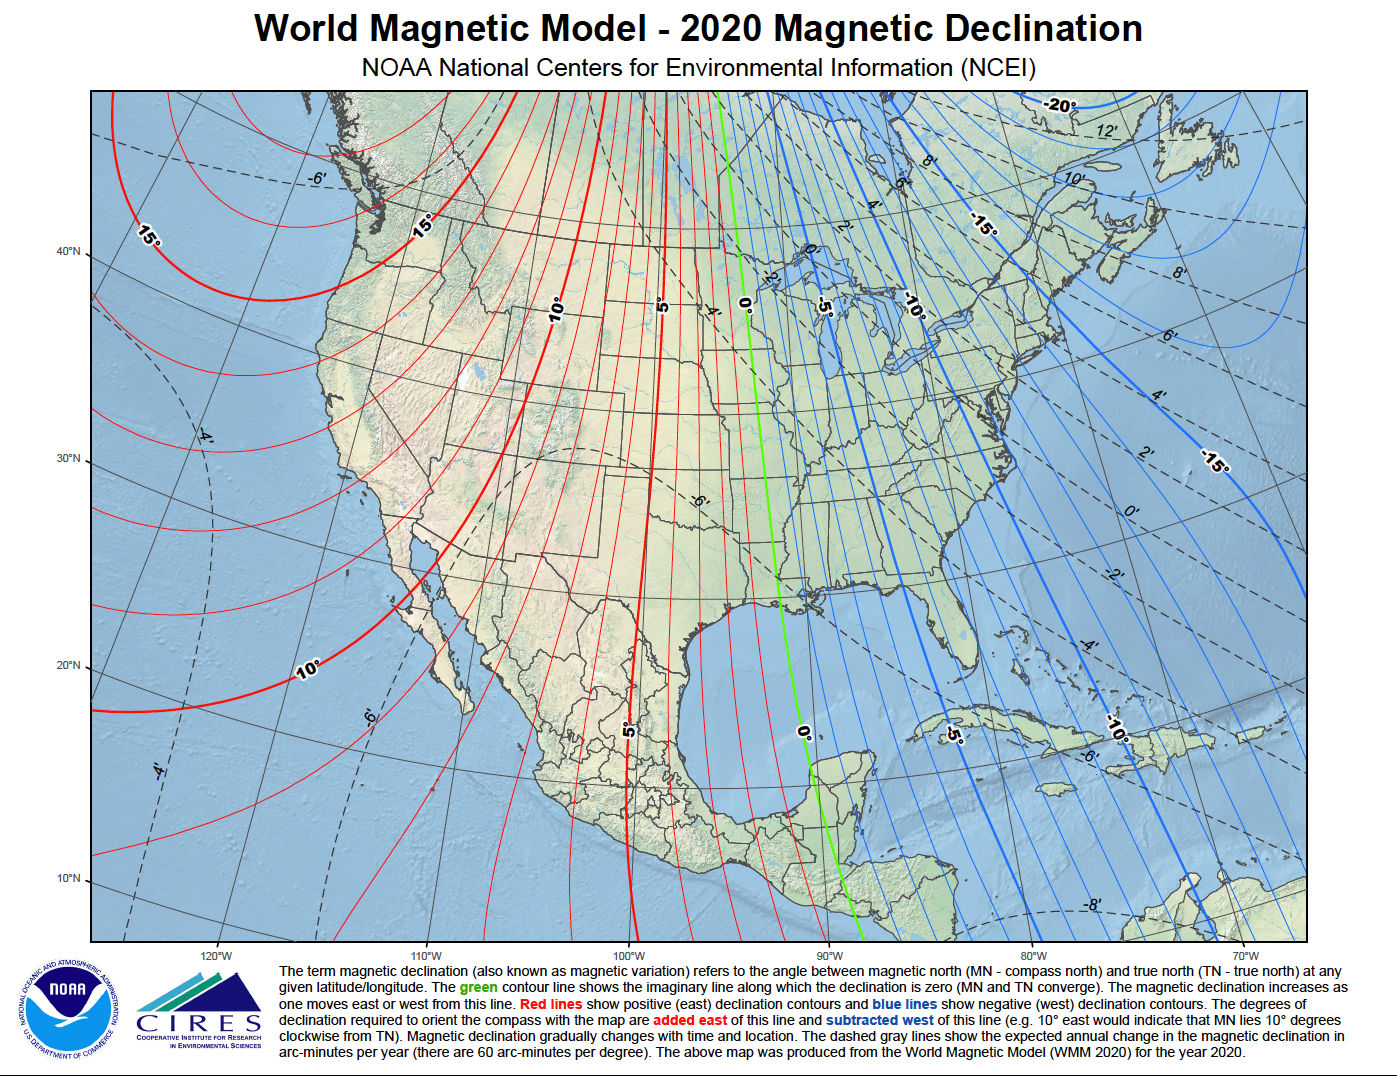 David Burch Blog: Magnetic Variation on Electronic Navigational Charts (ENC)